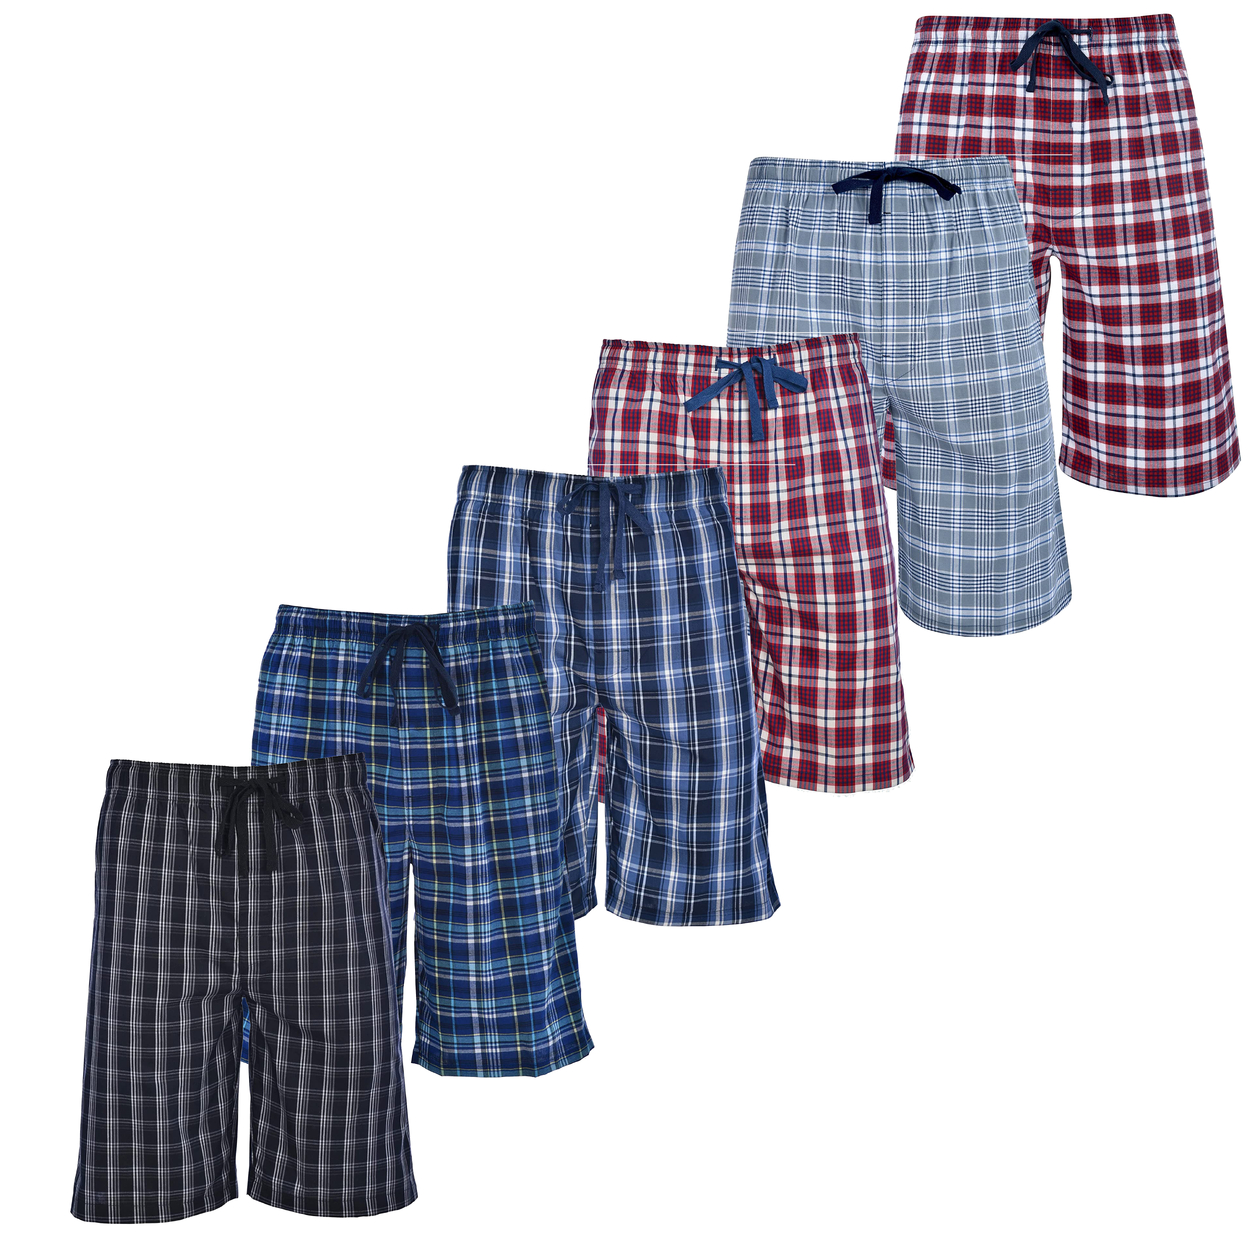 Multi-Pack: Men's Ultra Soft Plaid Lounge Pajama Sleep Wear Shorts - 3-pack, Medium